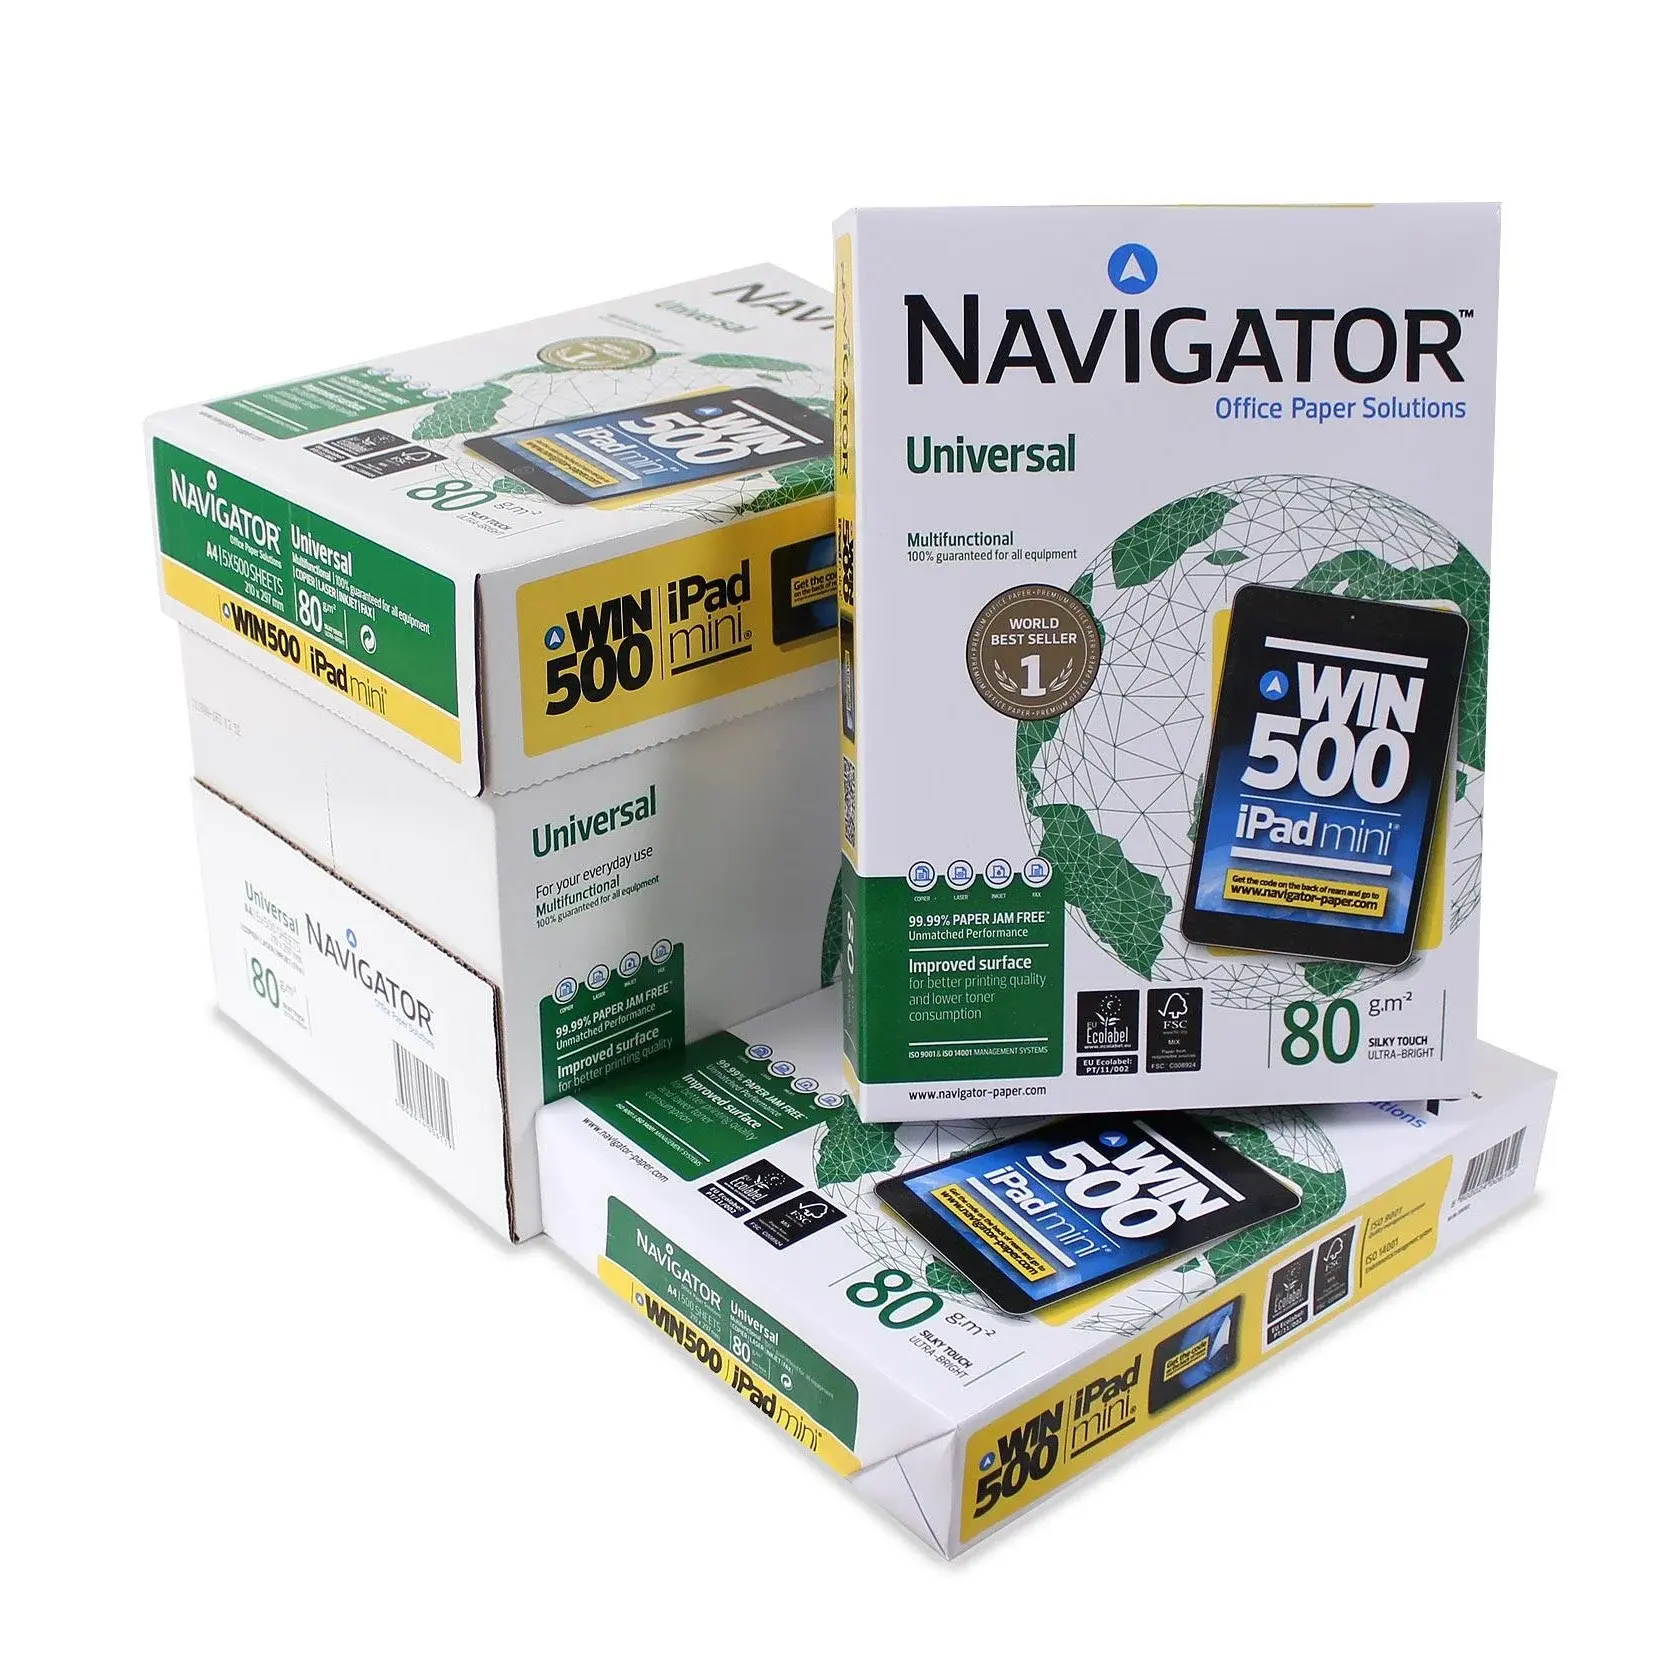 Good Sale 70gsm 80gsm Ream Papel A4 Navigator Universal A4 Copie Paper